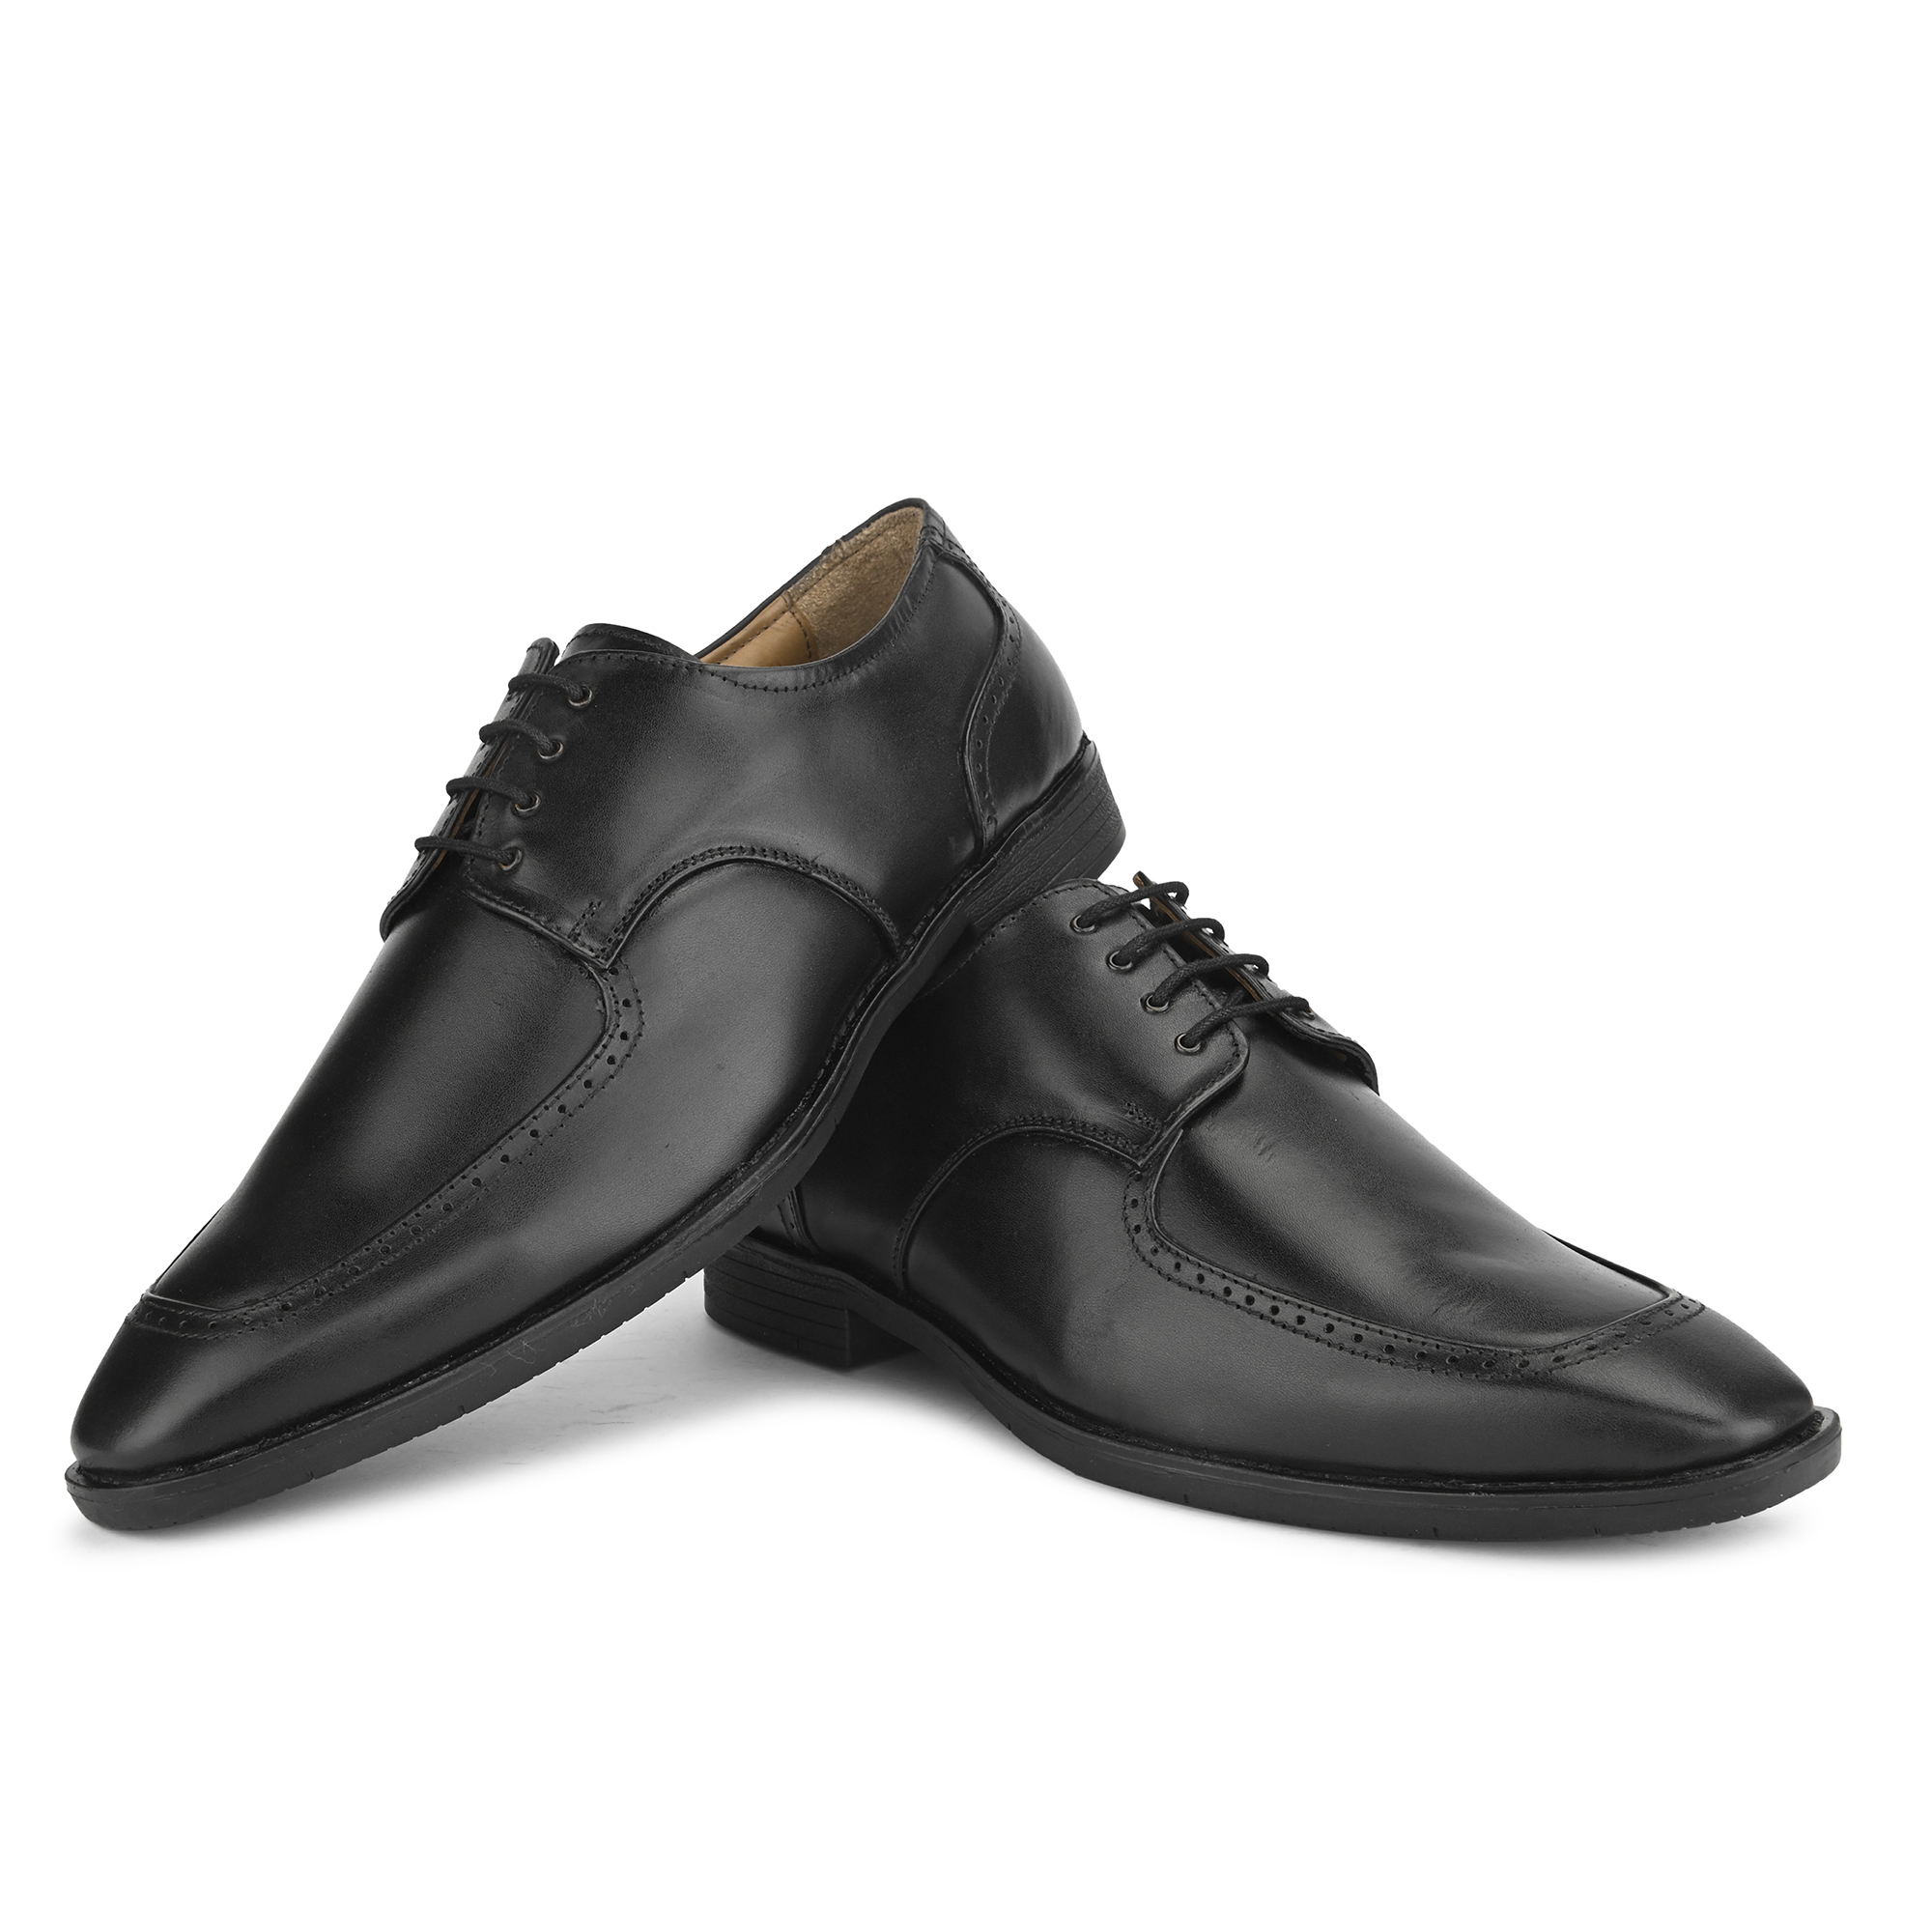 horex semi formal shoes for men